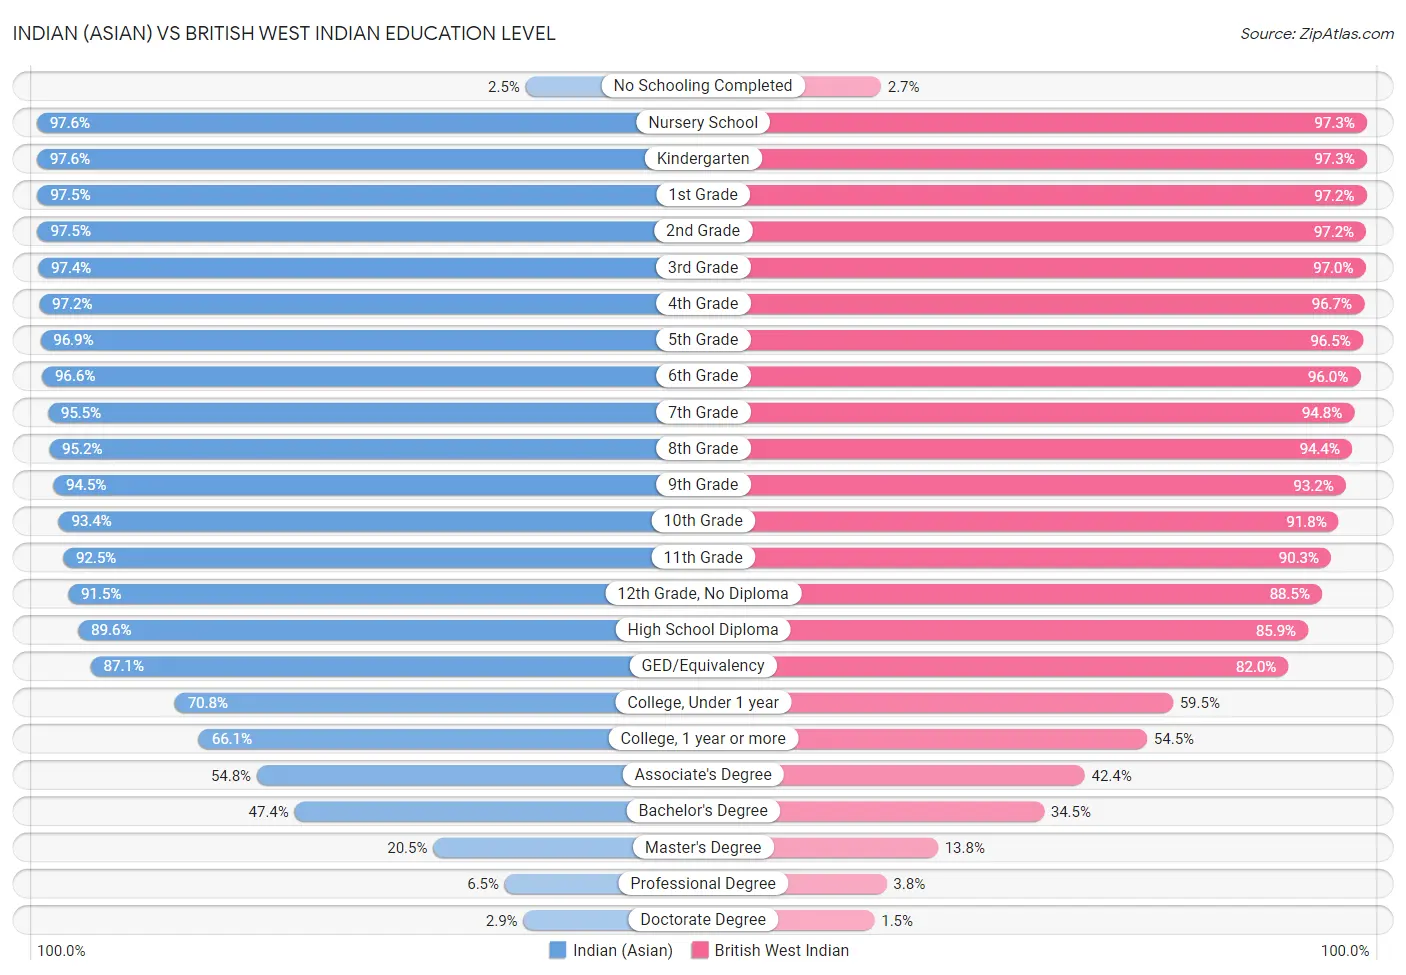 Indian (Asian) vs British West Indian Education Level